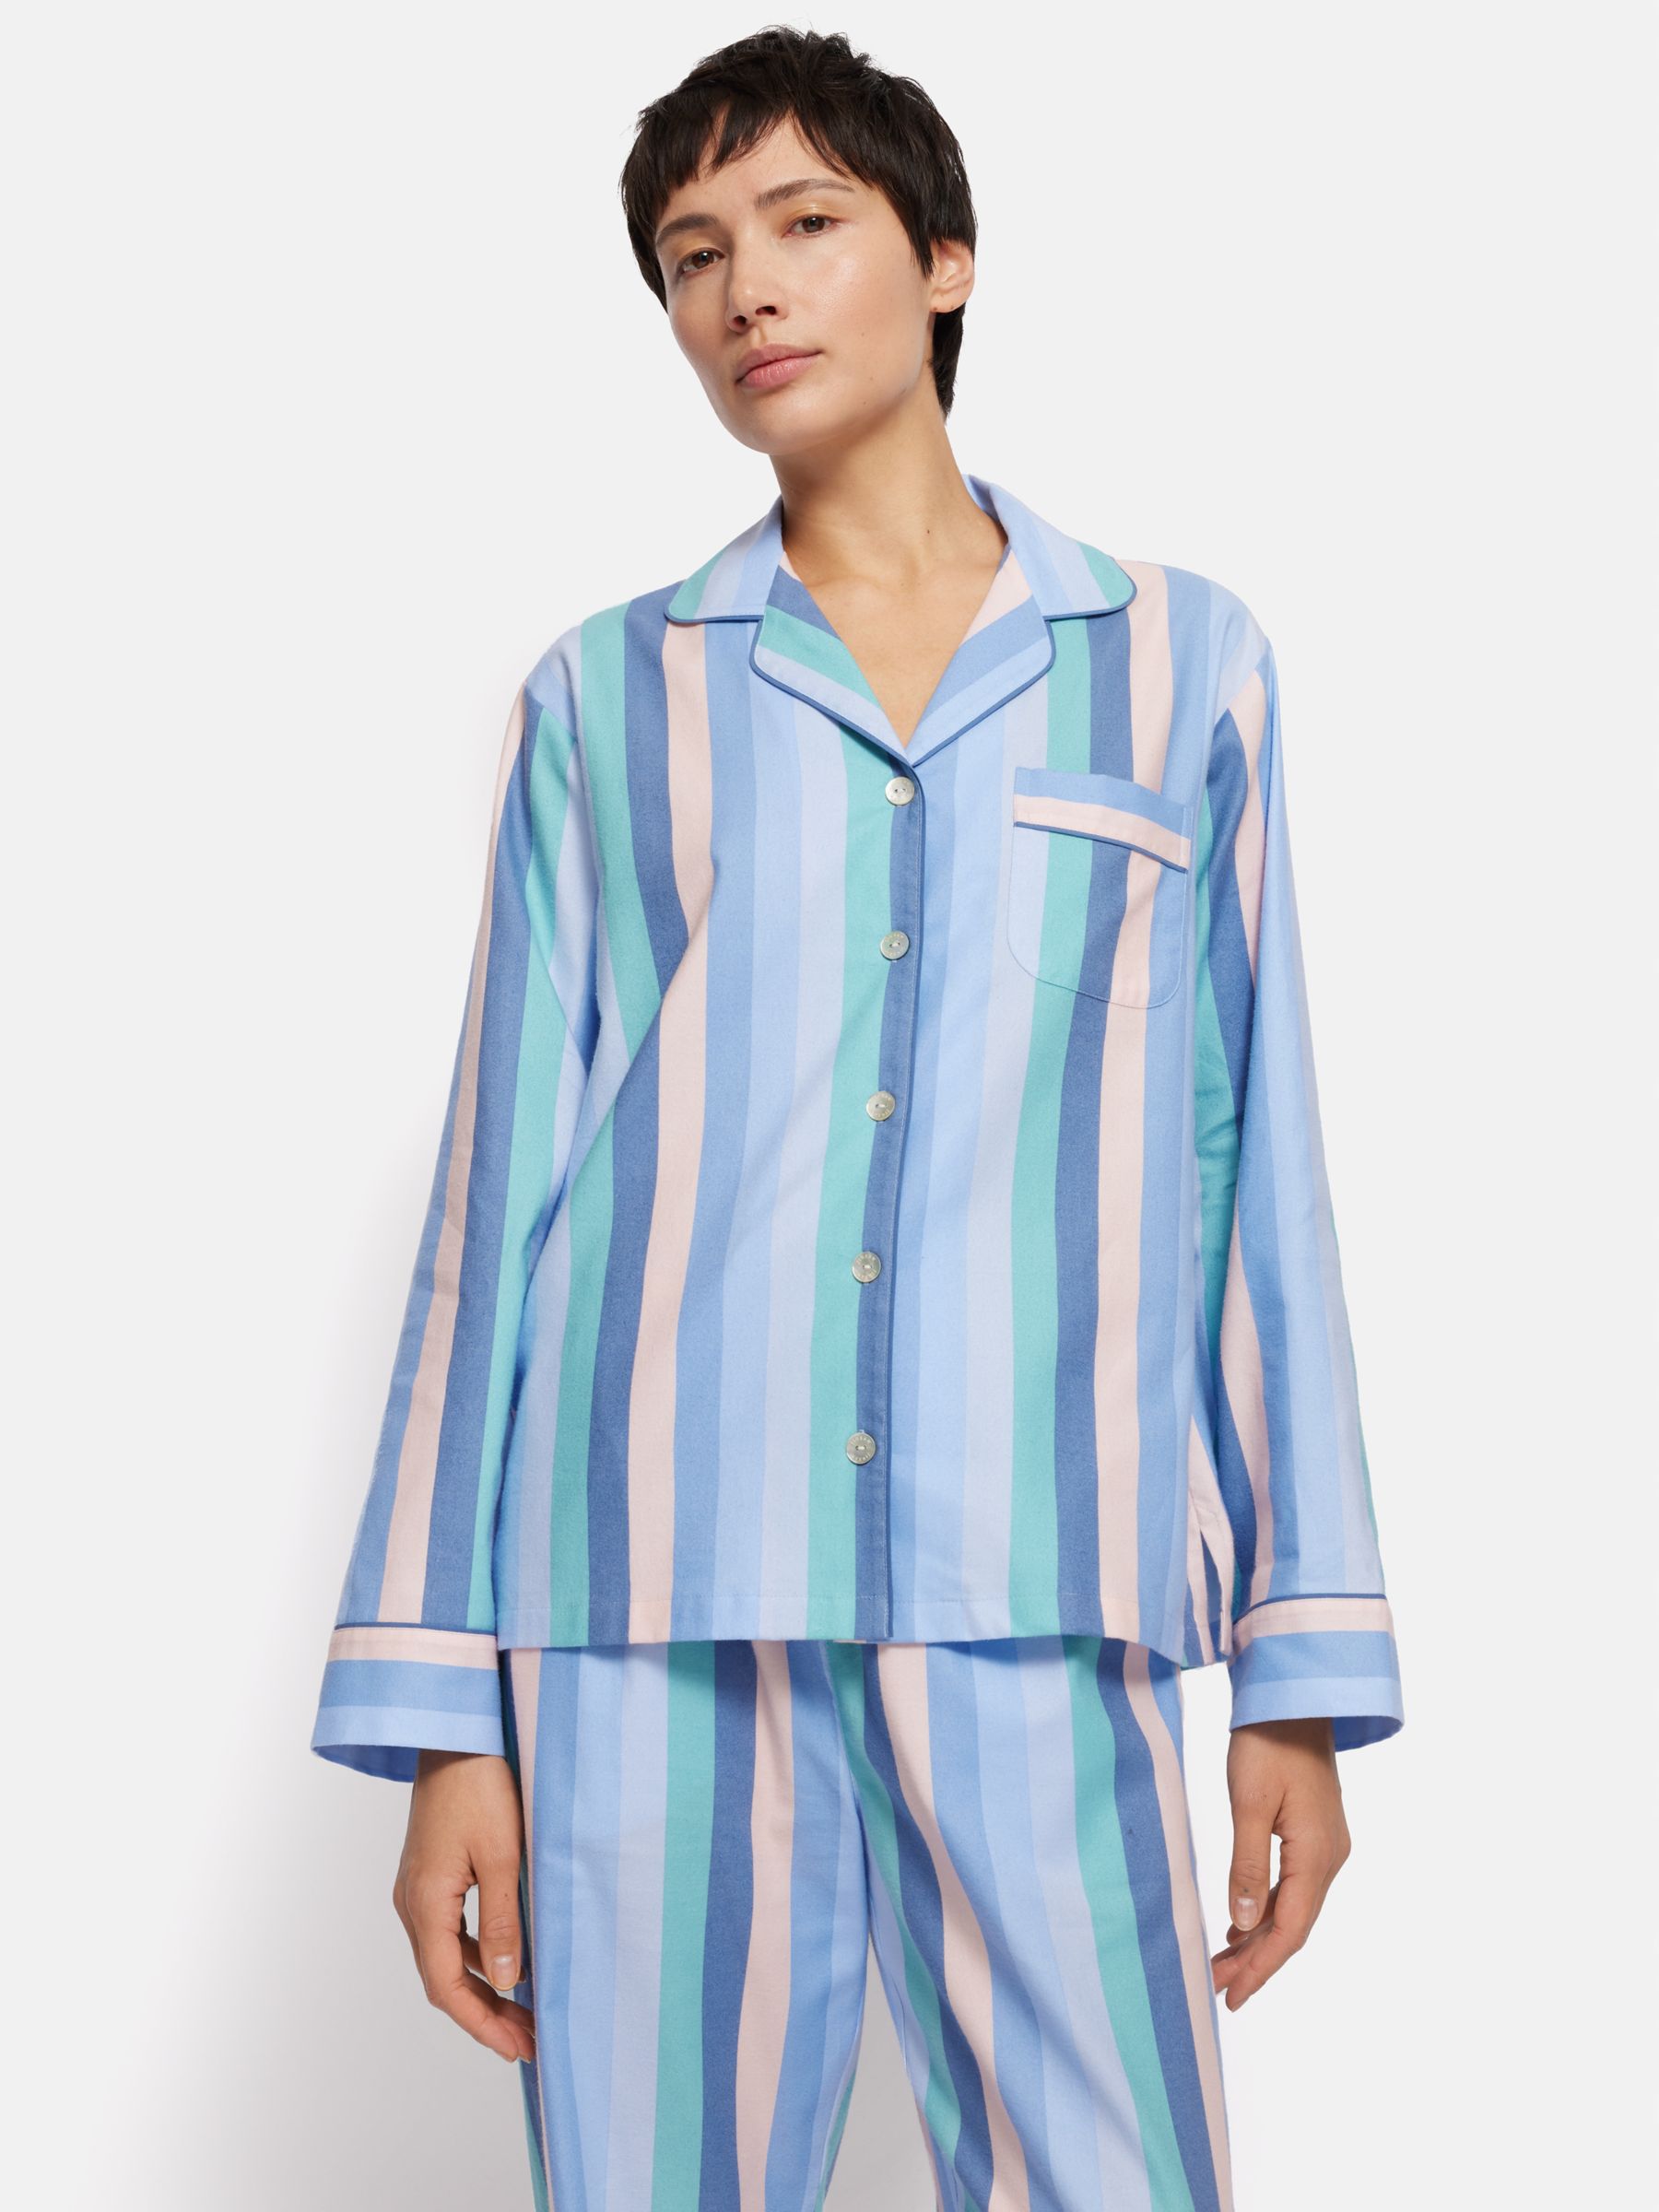 Jigsaw Stripe Brushed Cotton Twill Pyjamas, Blue/Multi, XS